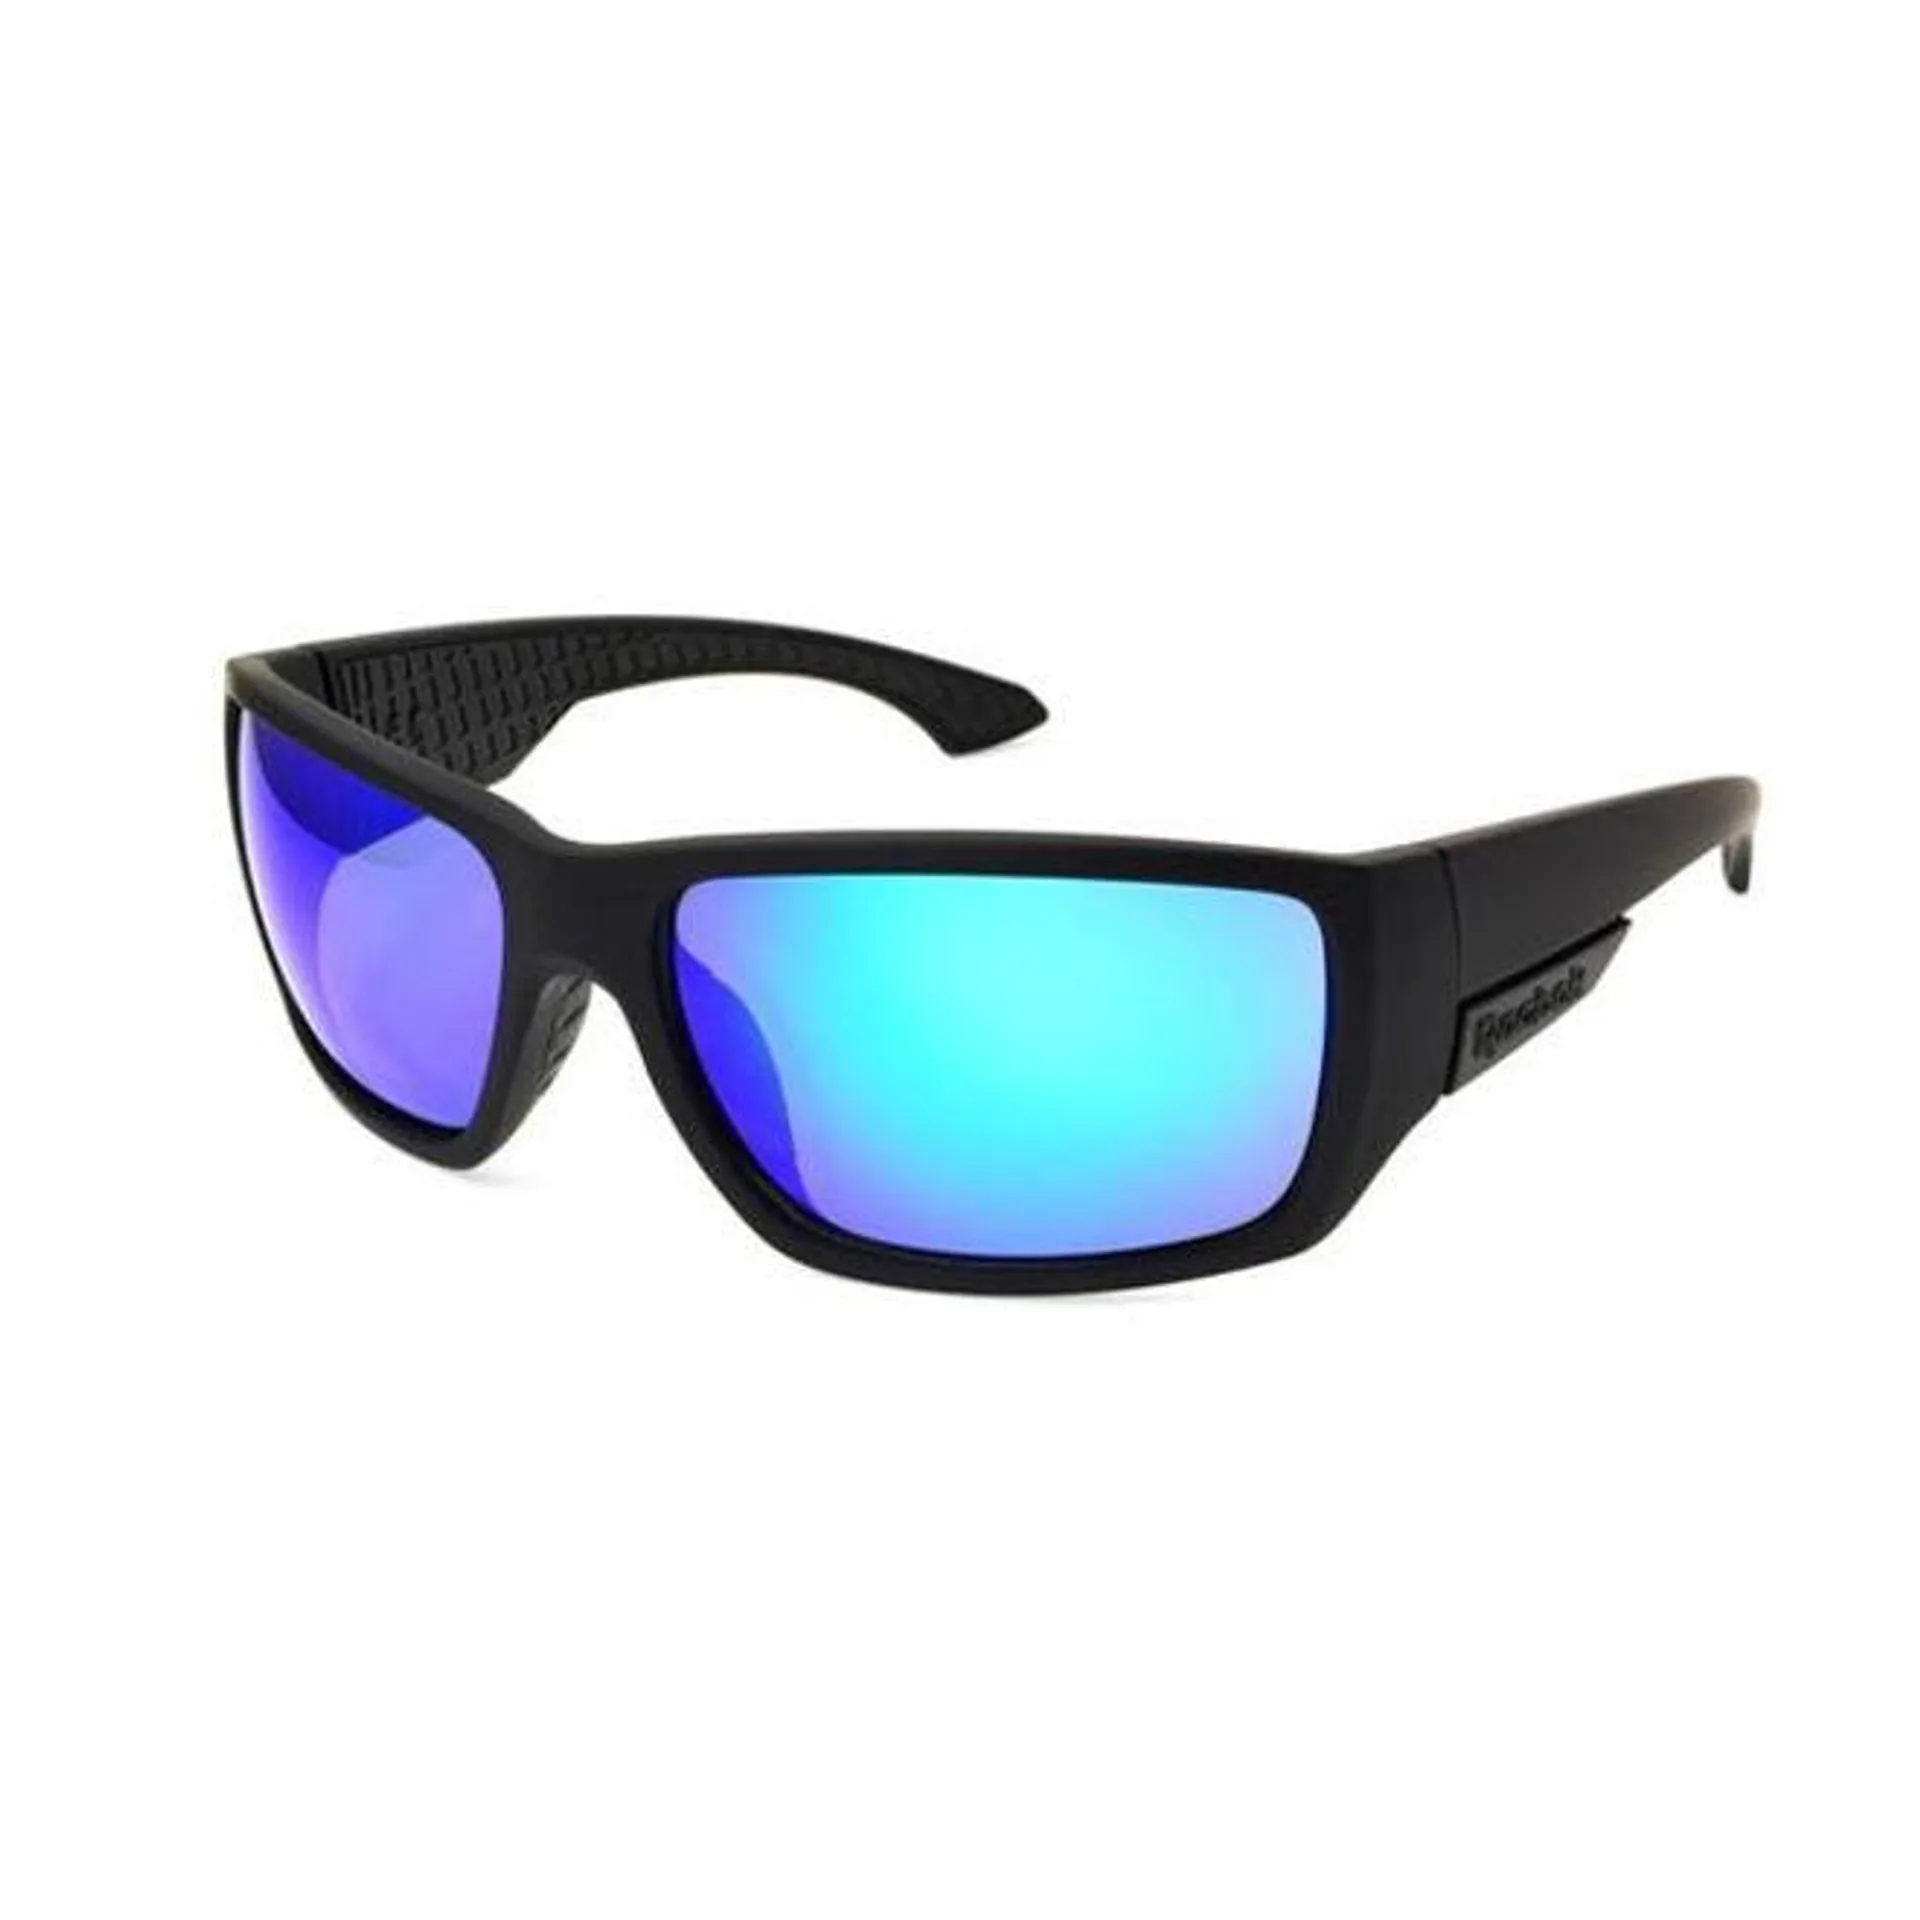 Reebok Mens Class Sunglasses in Blue